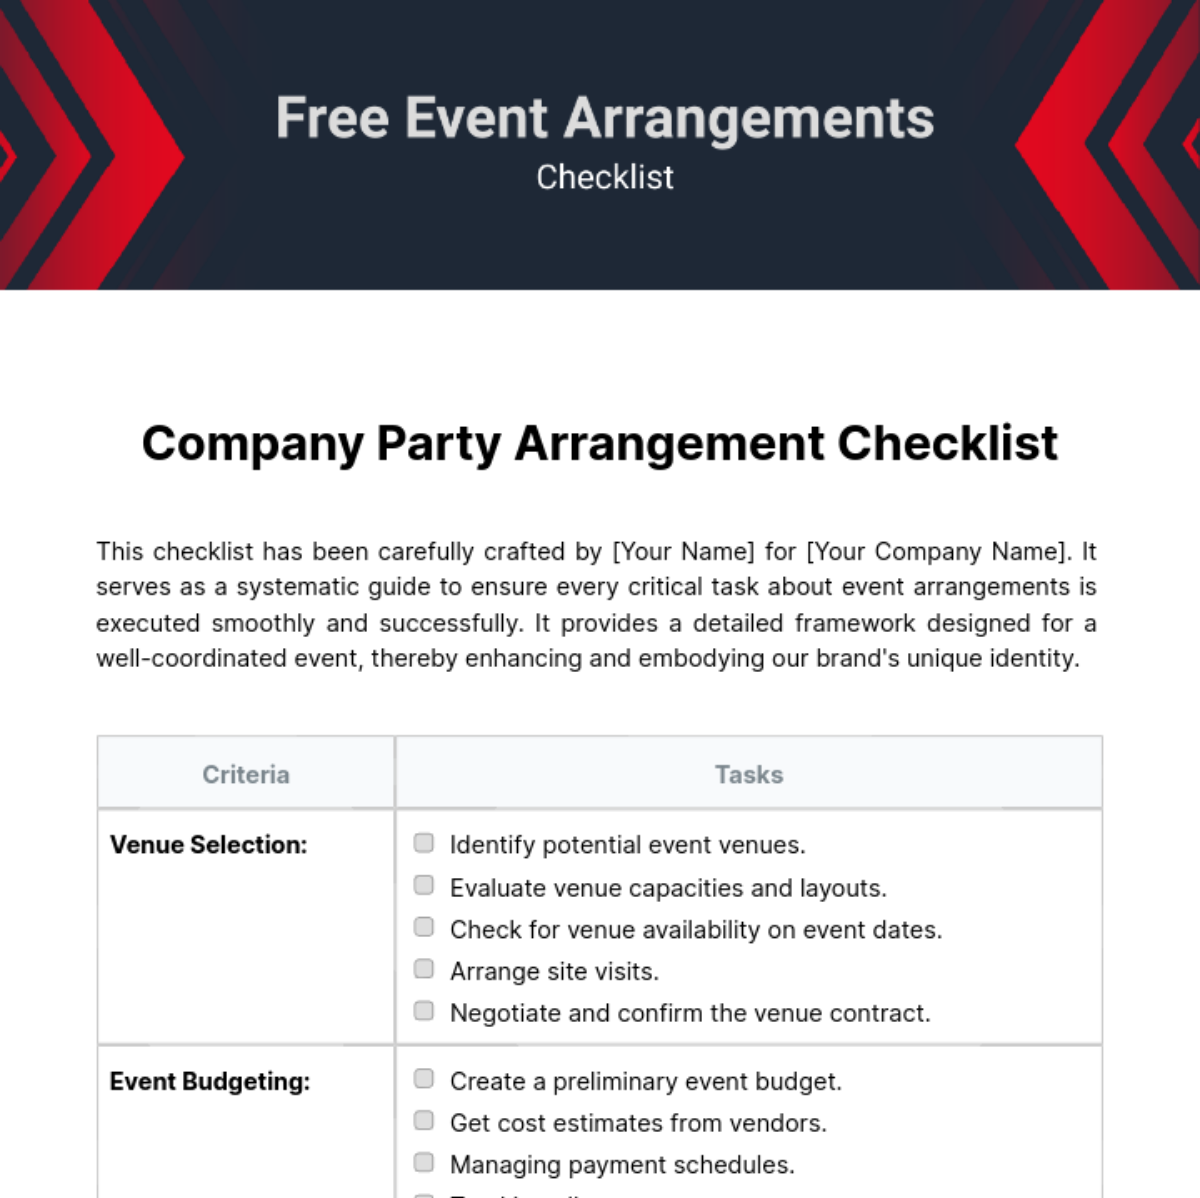 Event Arrangements Checklist Template